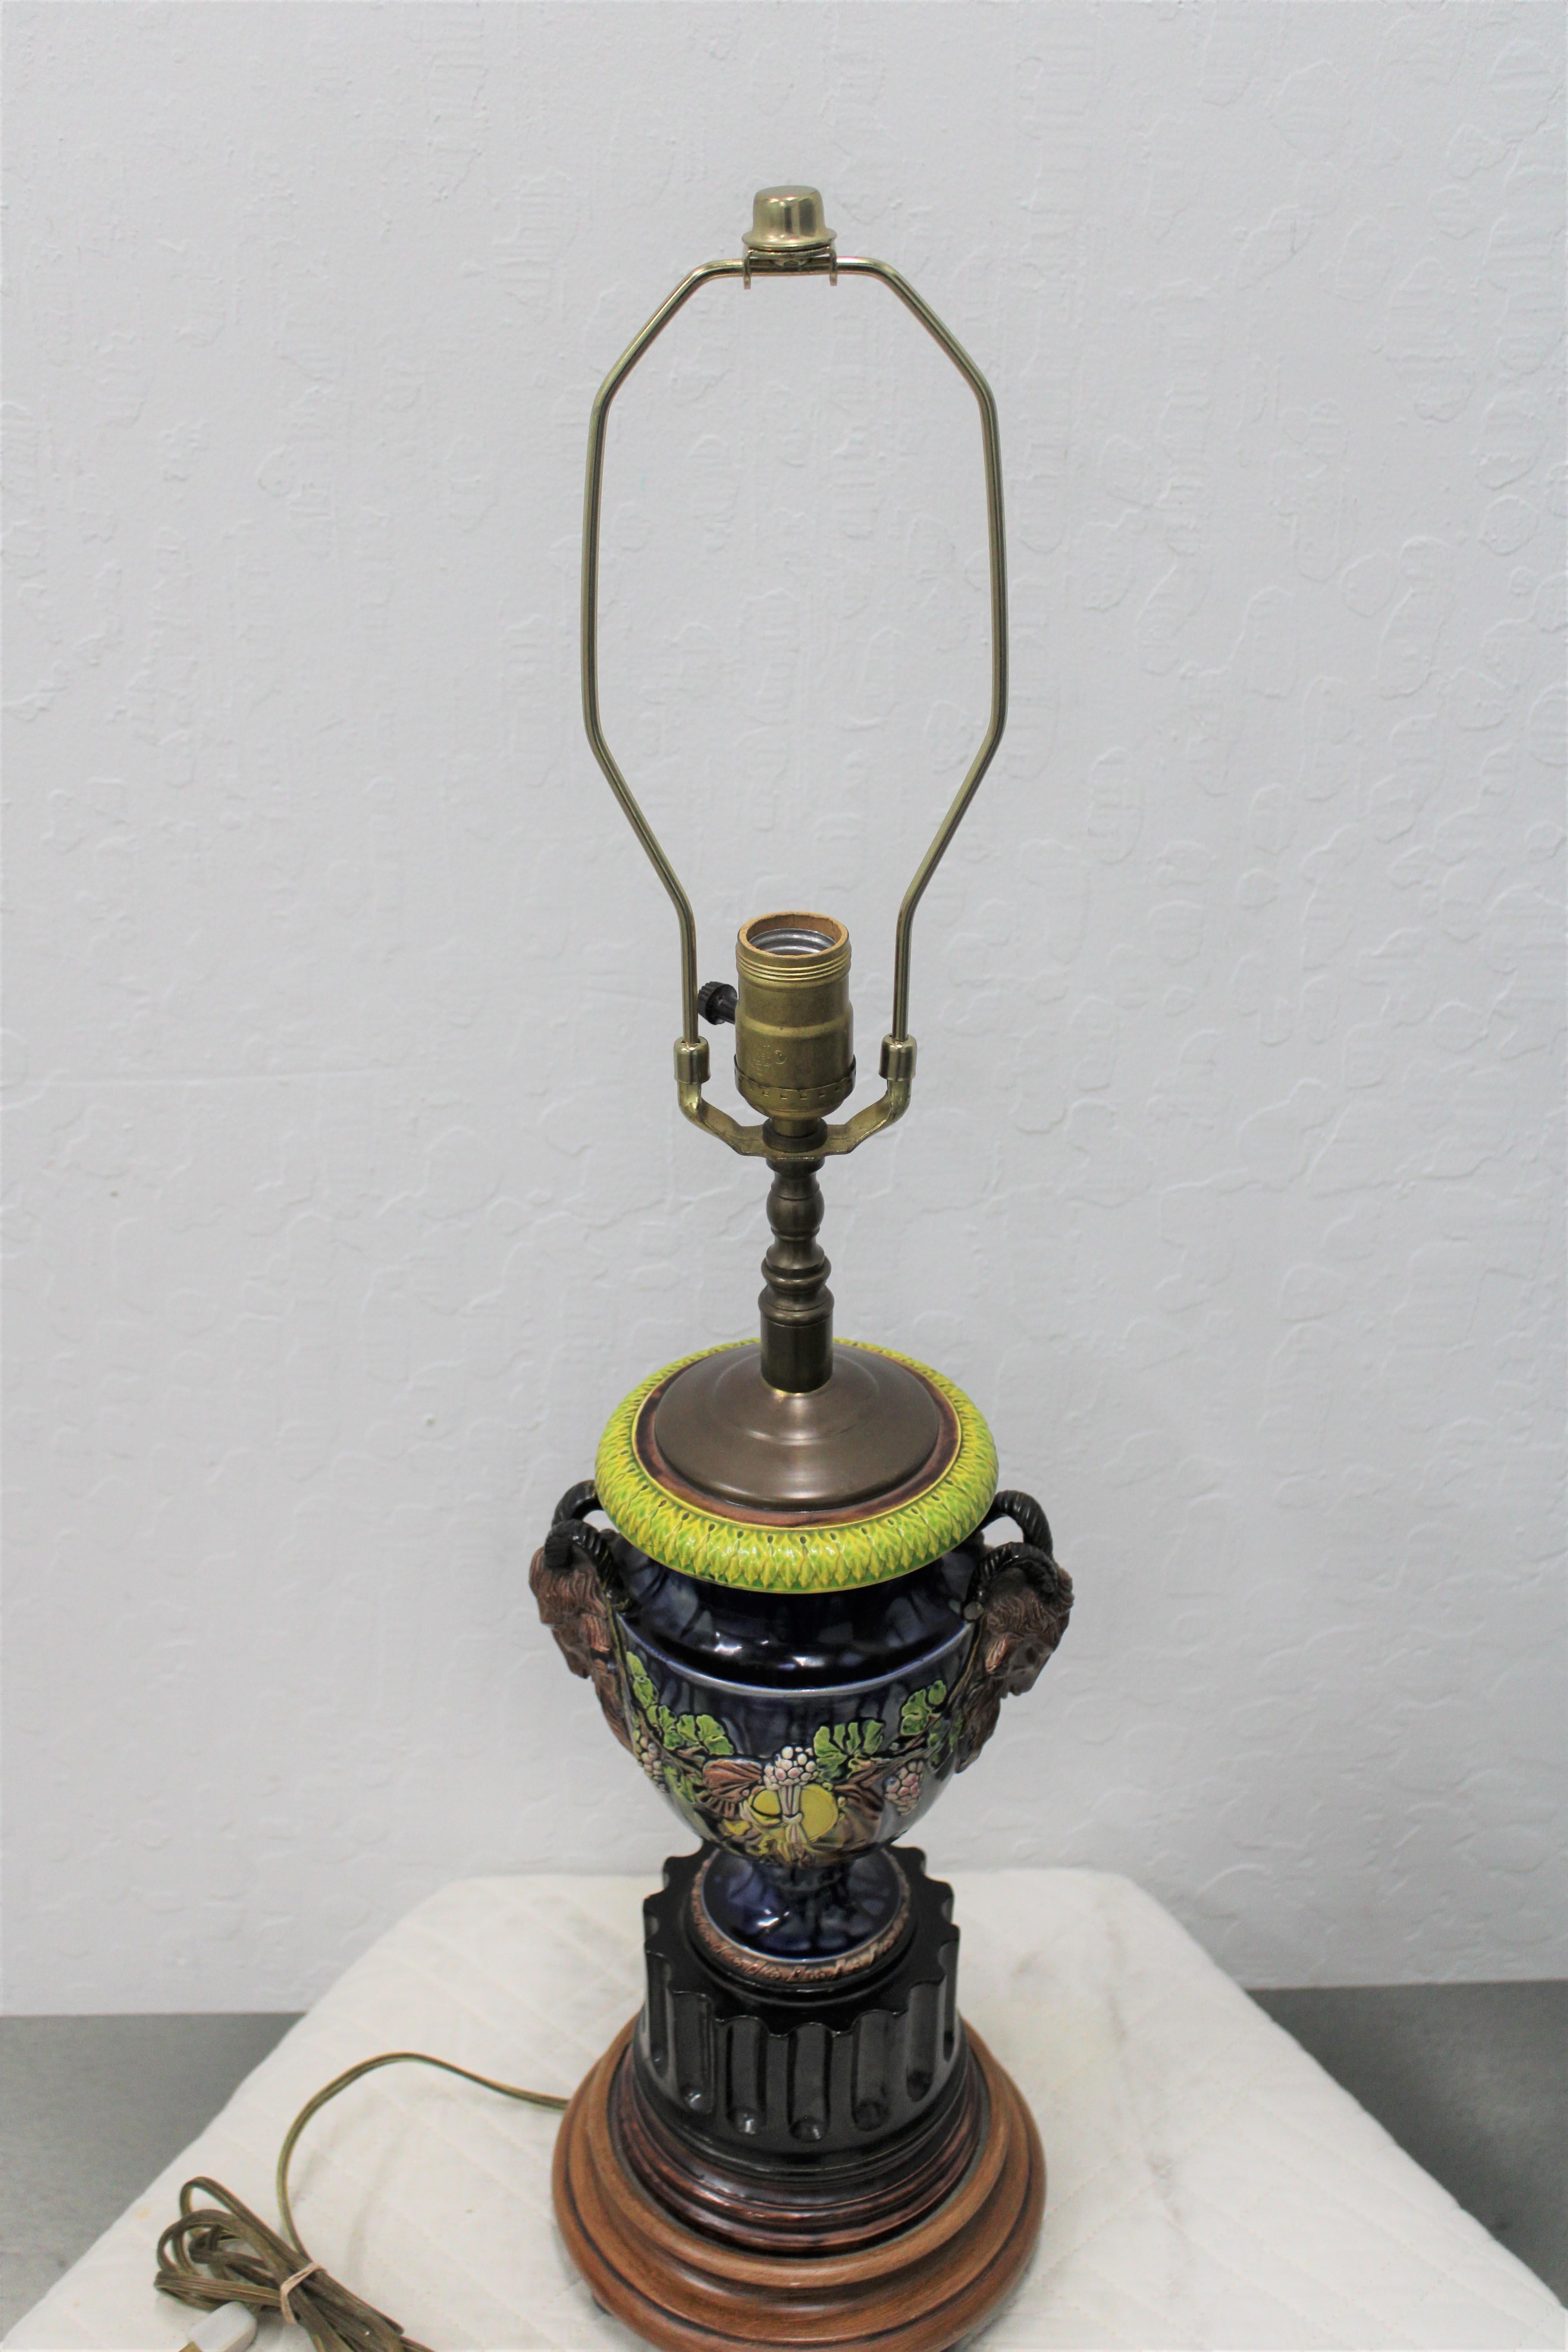 J. W. Trushell & Co. Lampe aus Metall, umgekehrt im Angebot 1